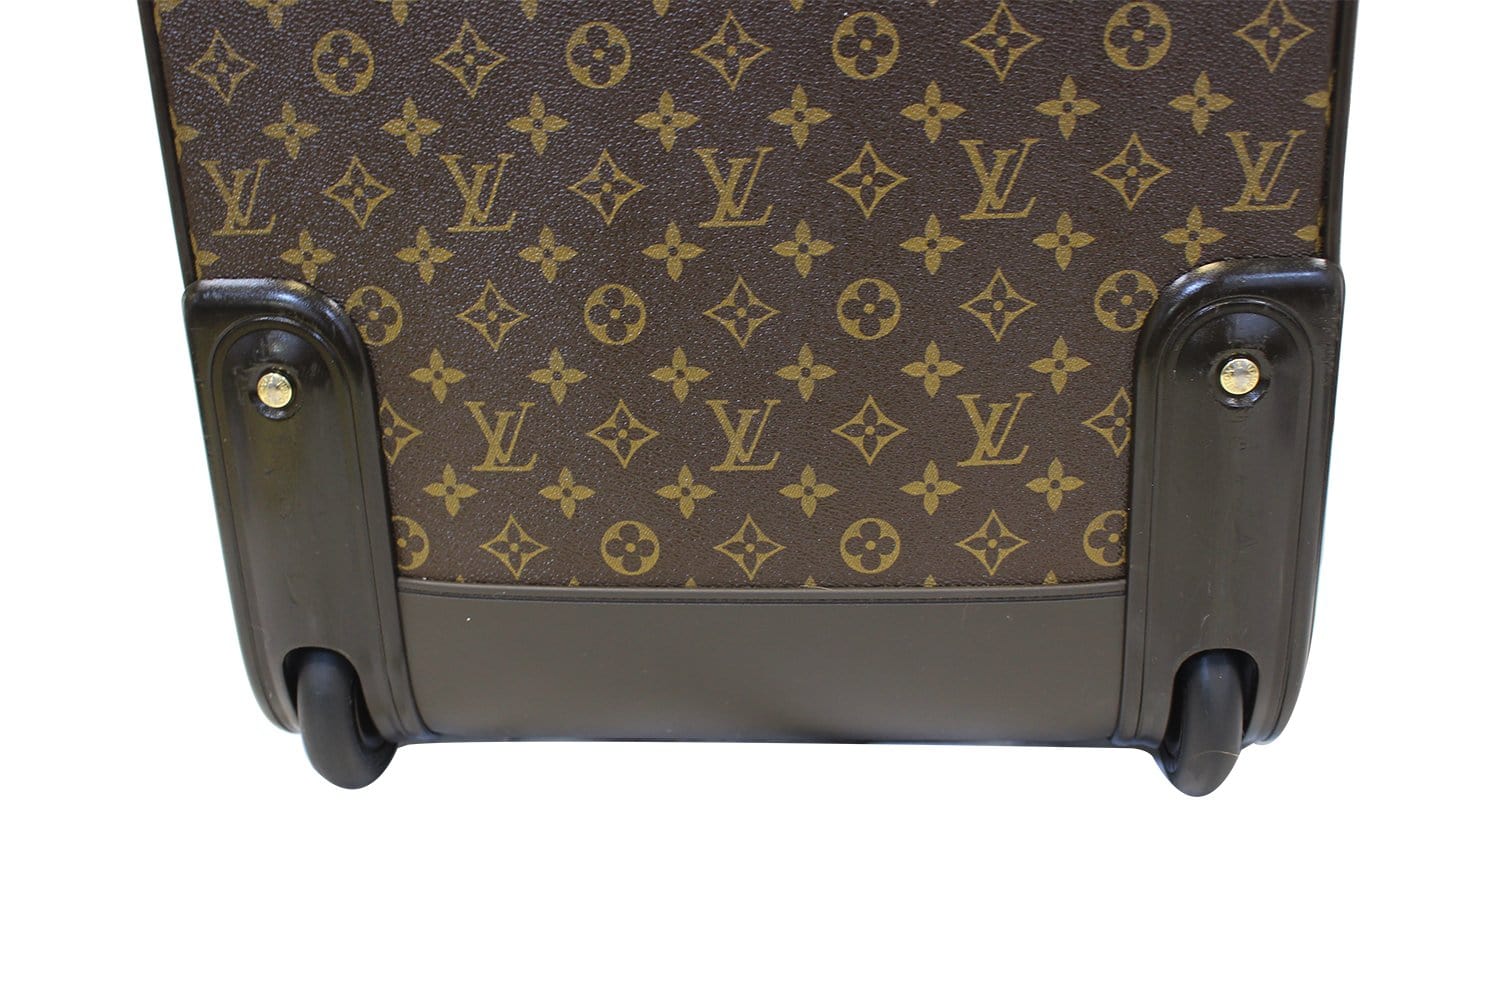 LOUIS VUITTON Monogram Pegase 55 Business Suitcase Travel Bag - Final